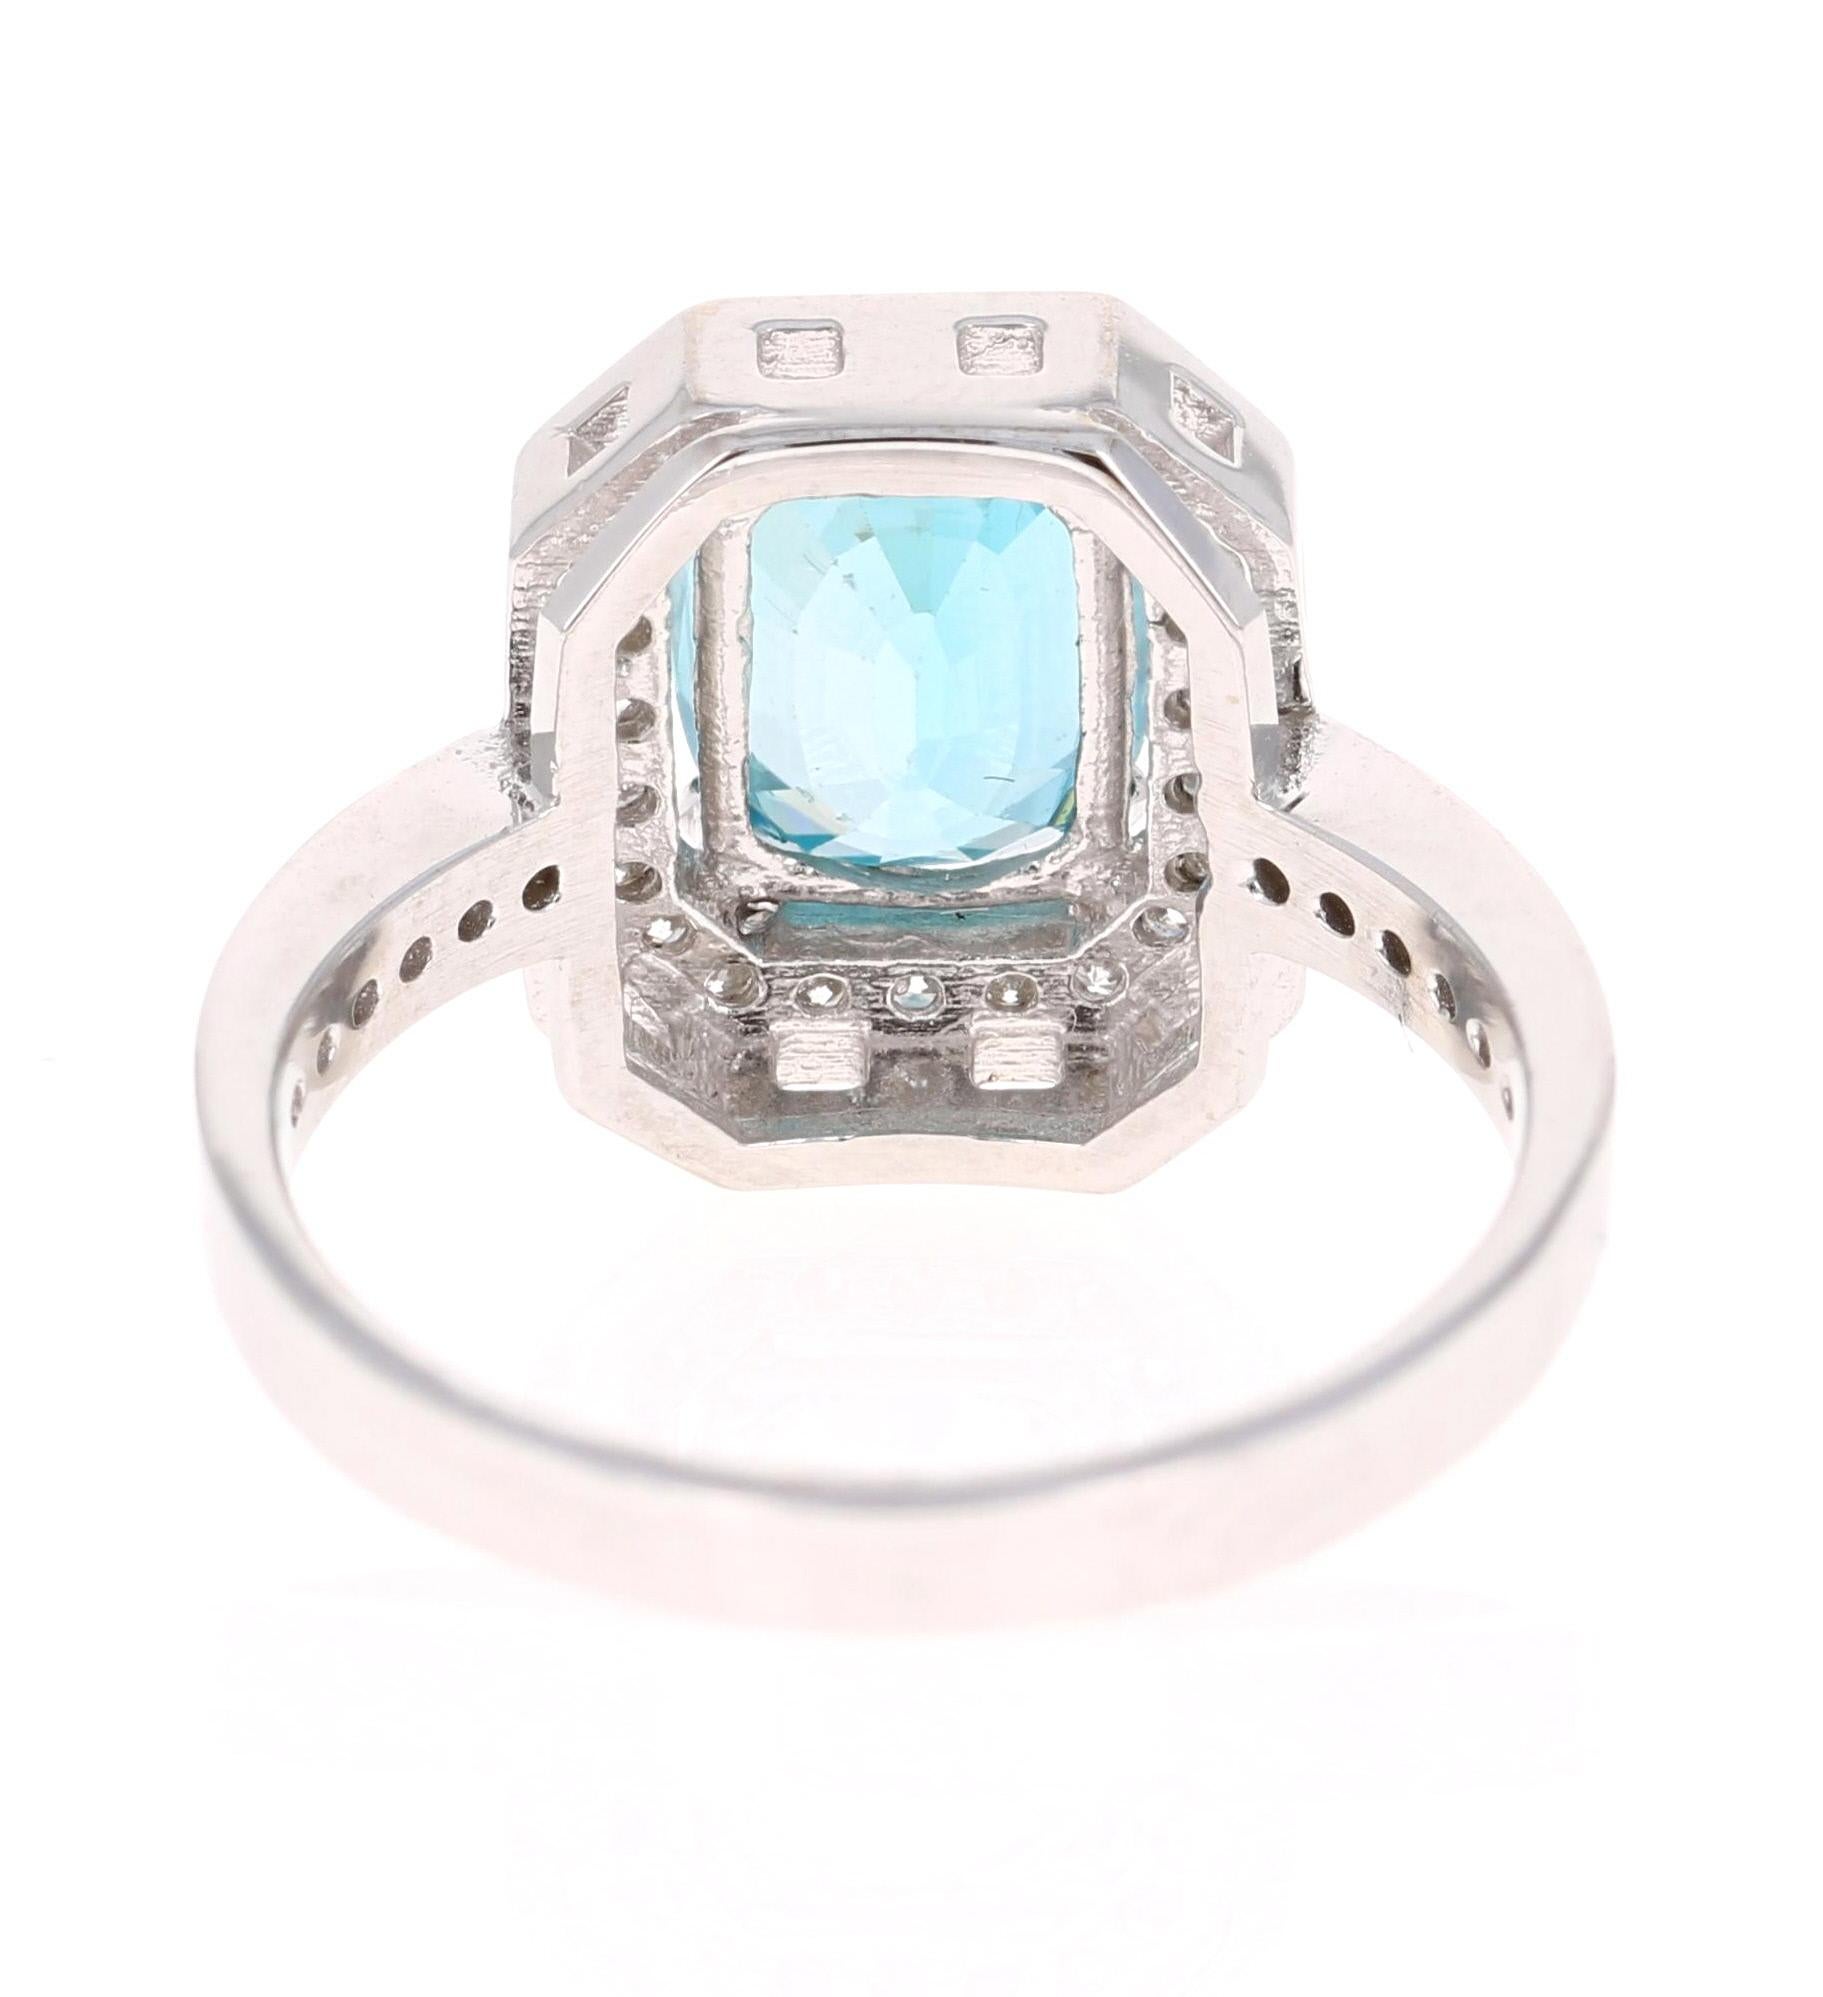 Oval Cut 3.79 Carat Blue Zircon Diamond 14 Karat White Gold Ring